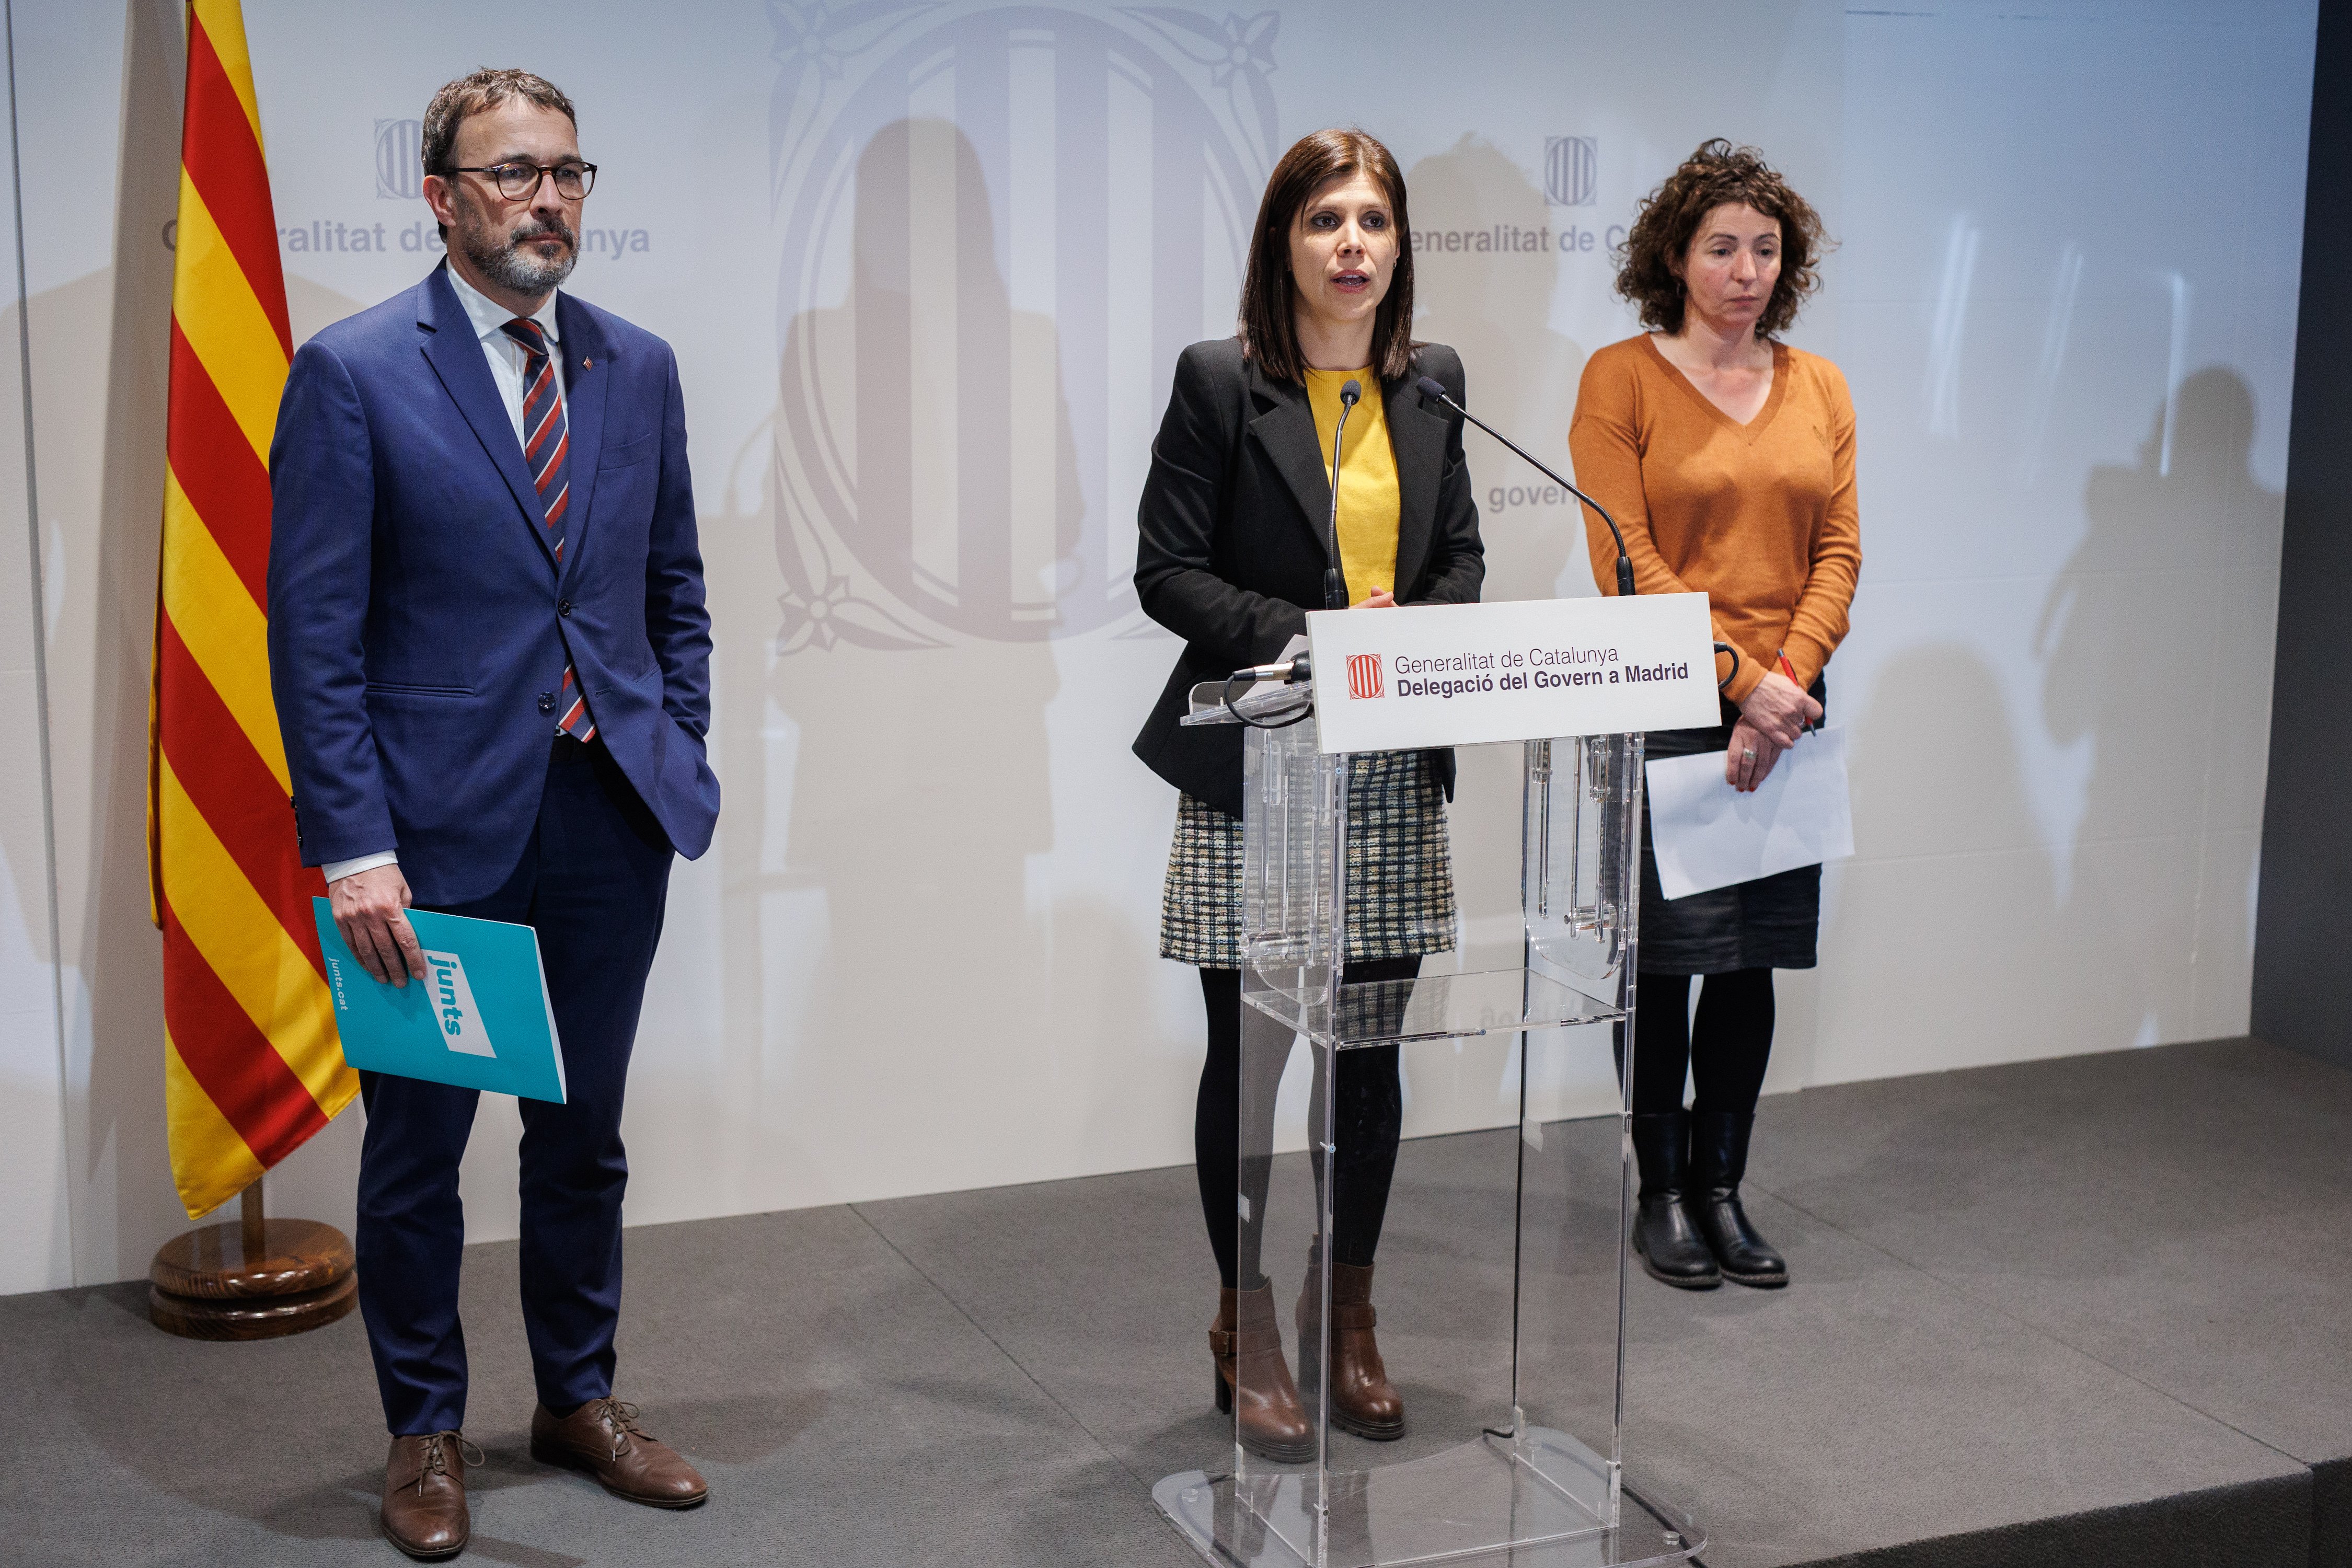 Three Catalan parties show confidence that European action can clarify Pegasus case